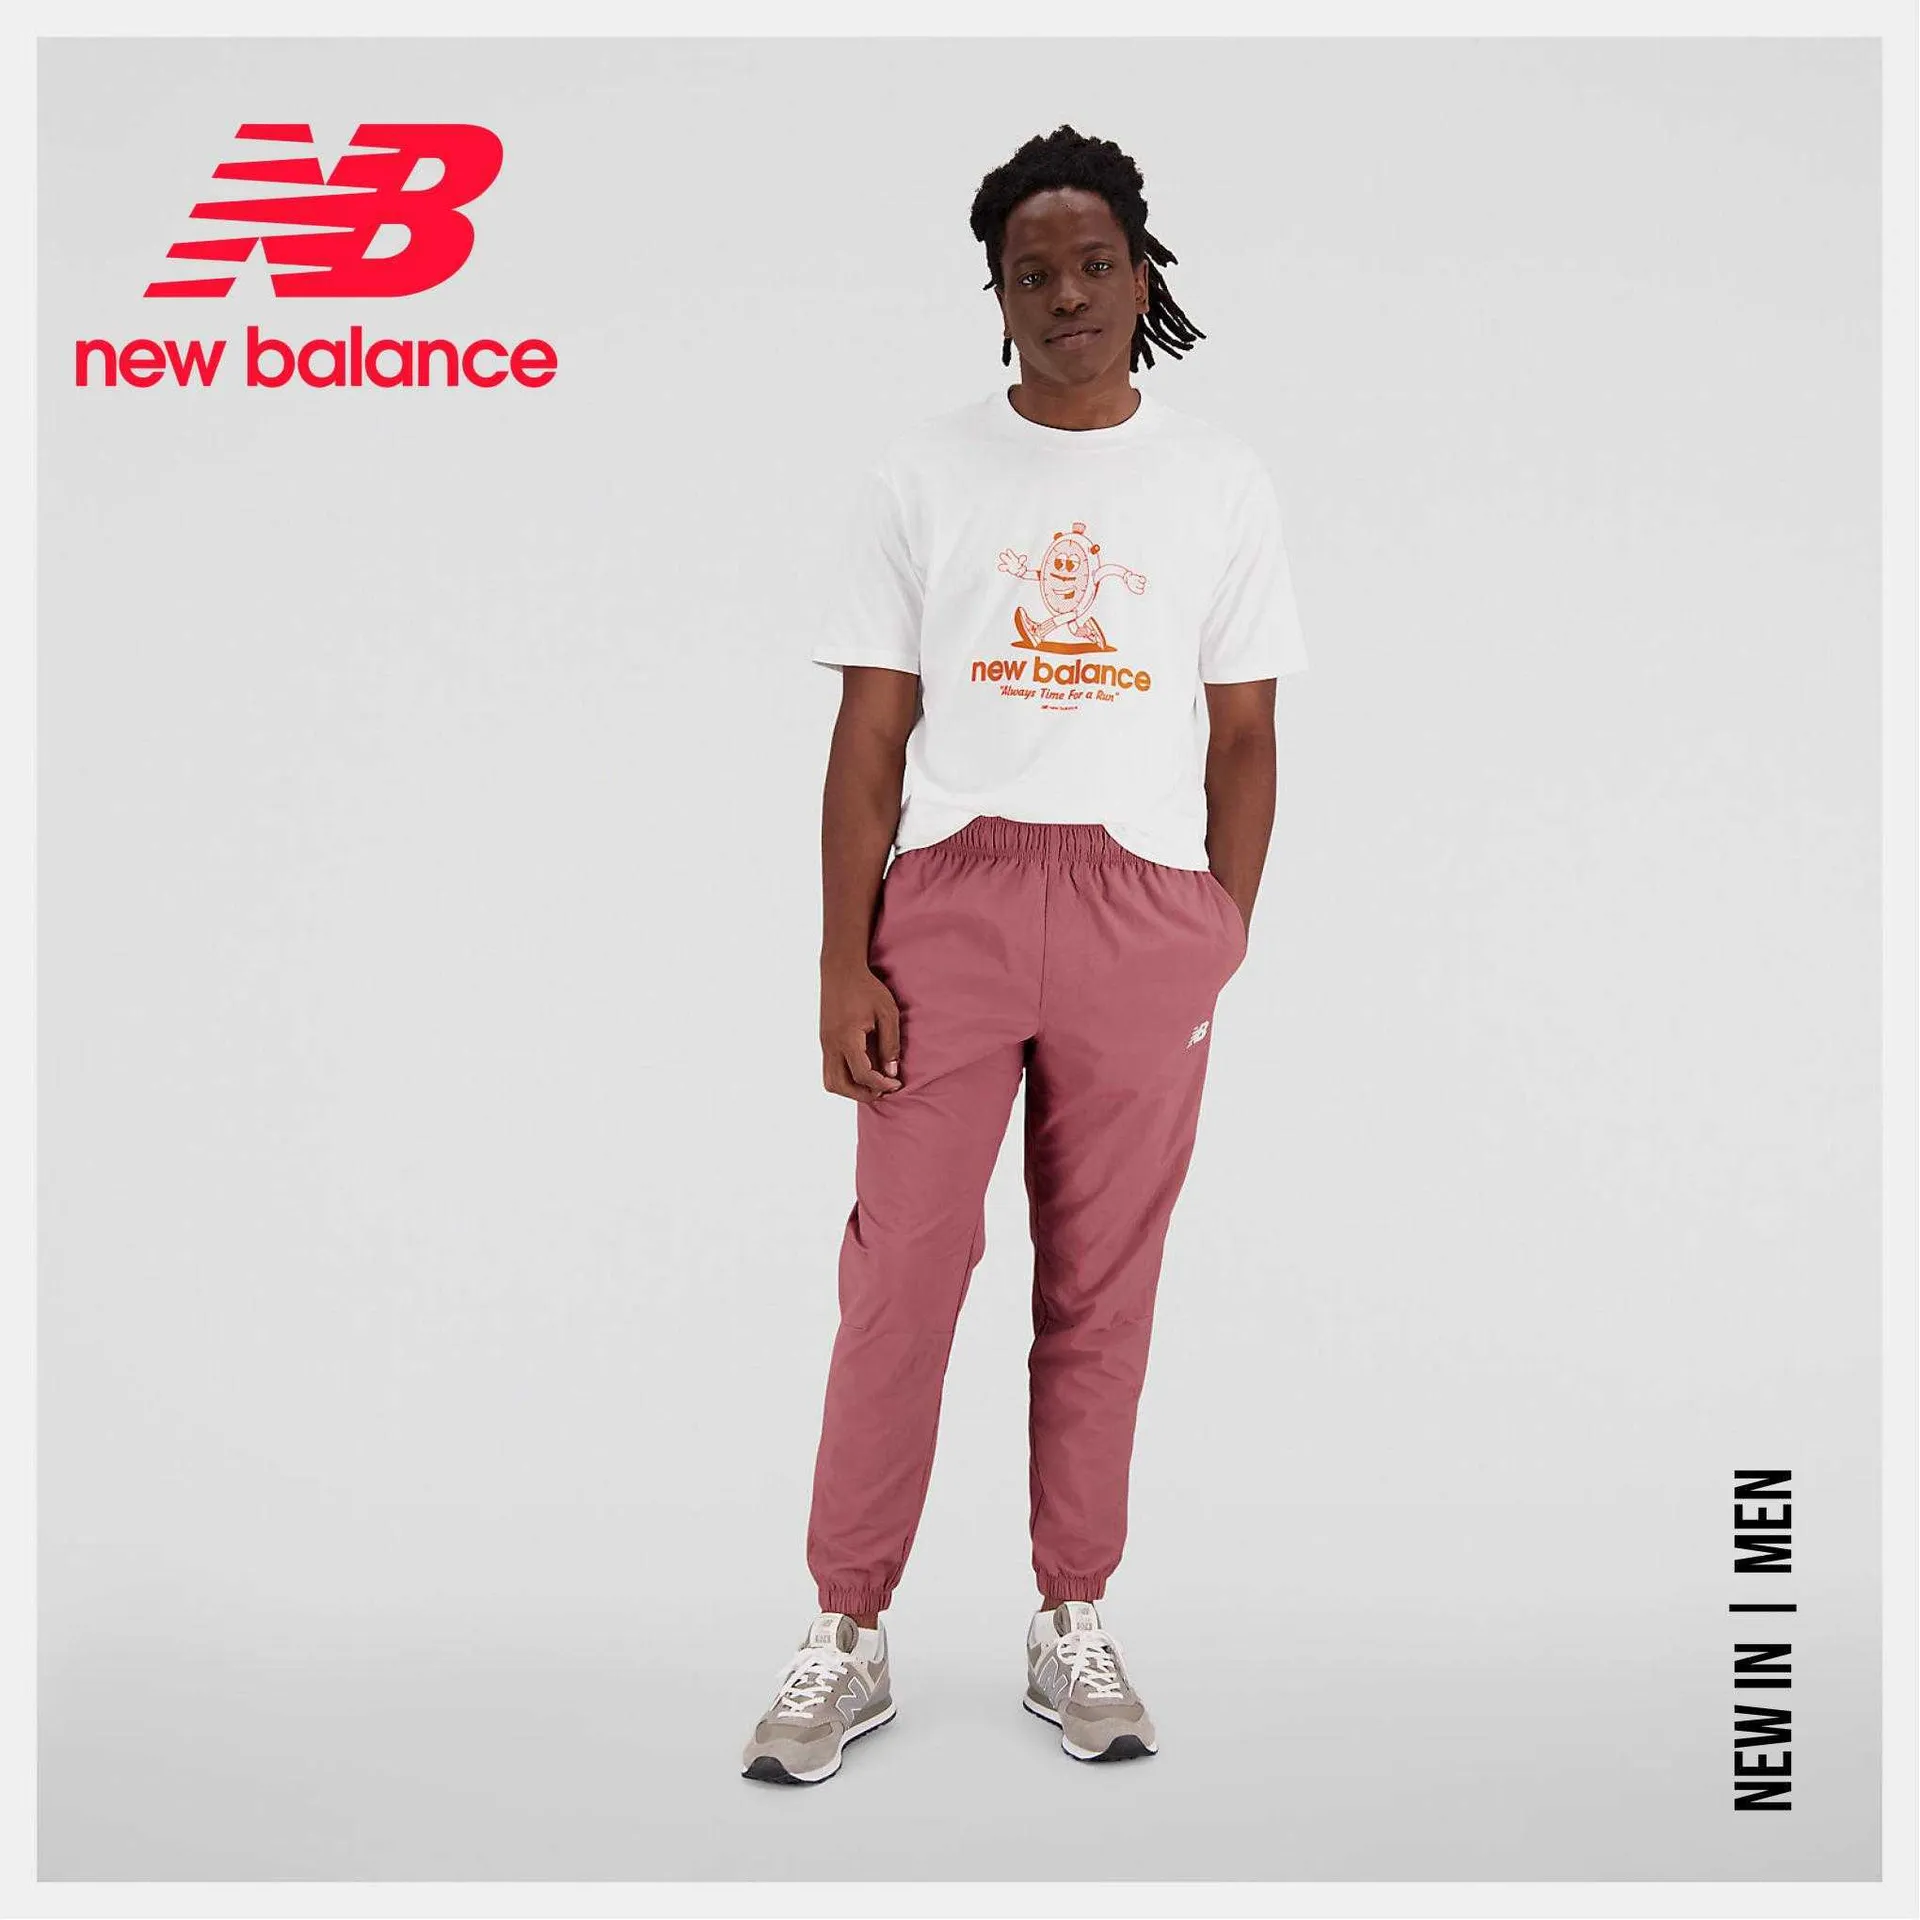 New Balance Catalogue - 1